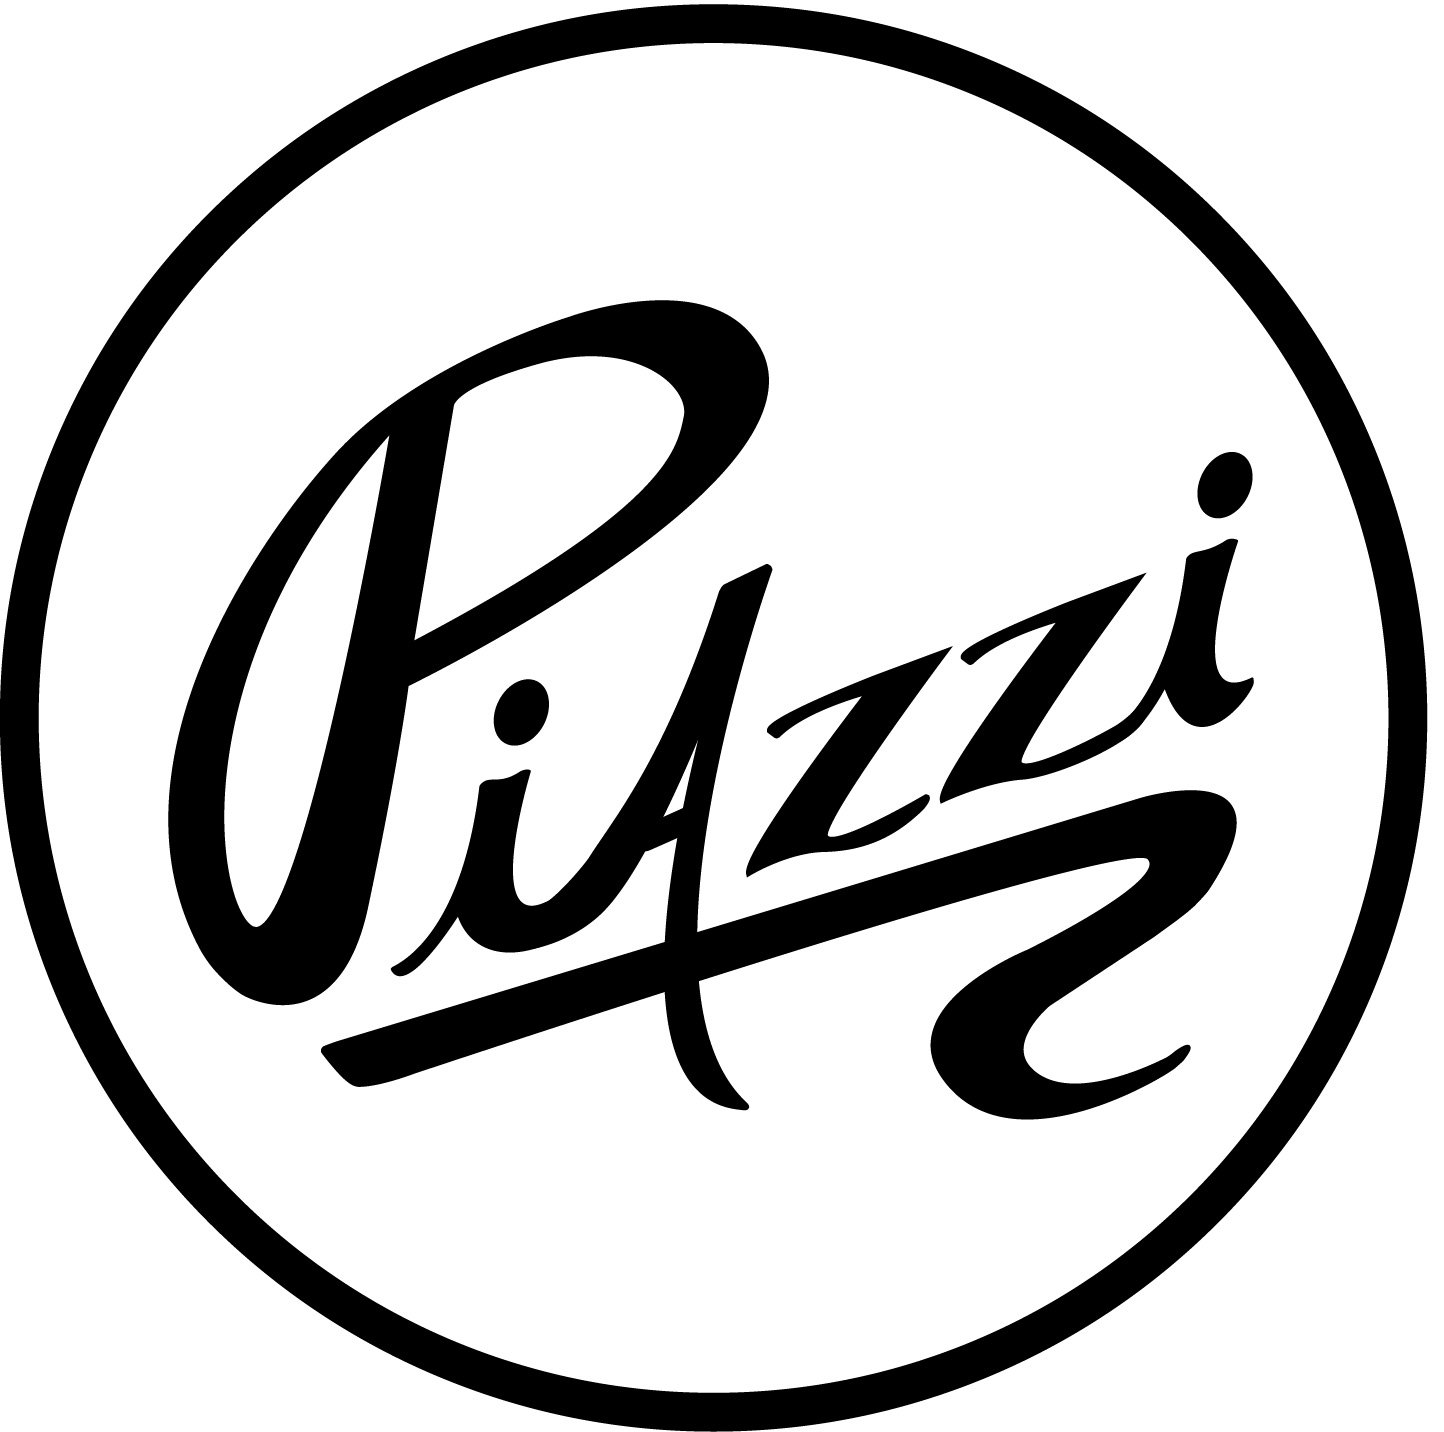 Piazzi